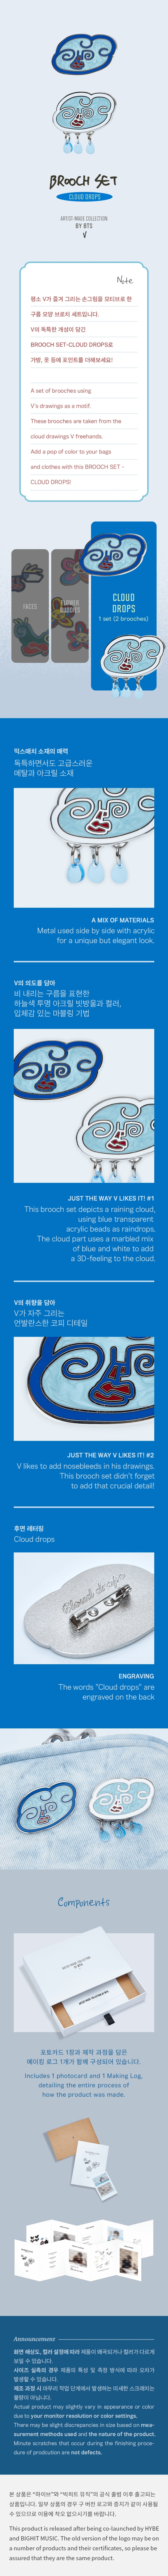 BTS [V] ブローチセット (Cloud Drops)